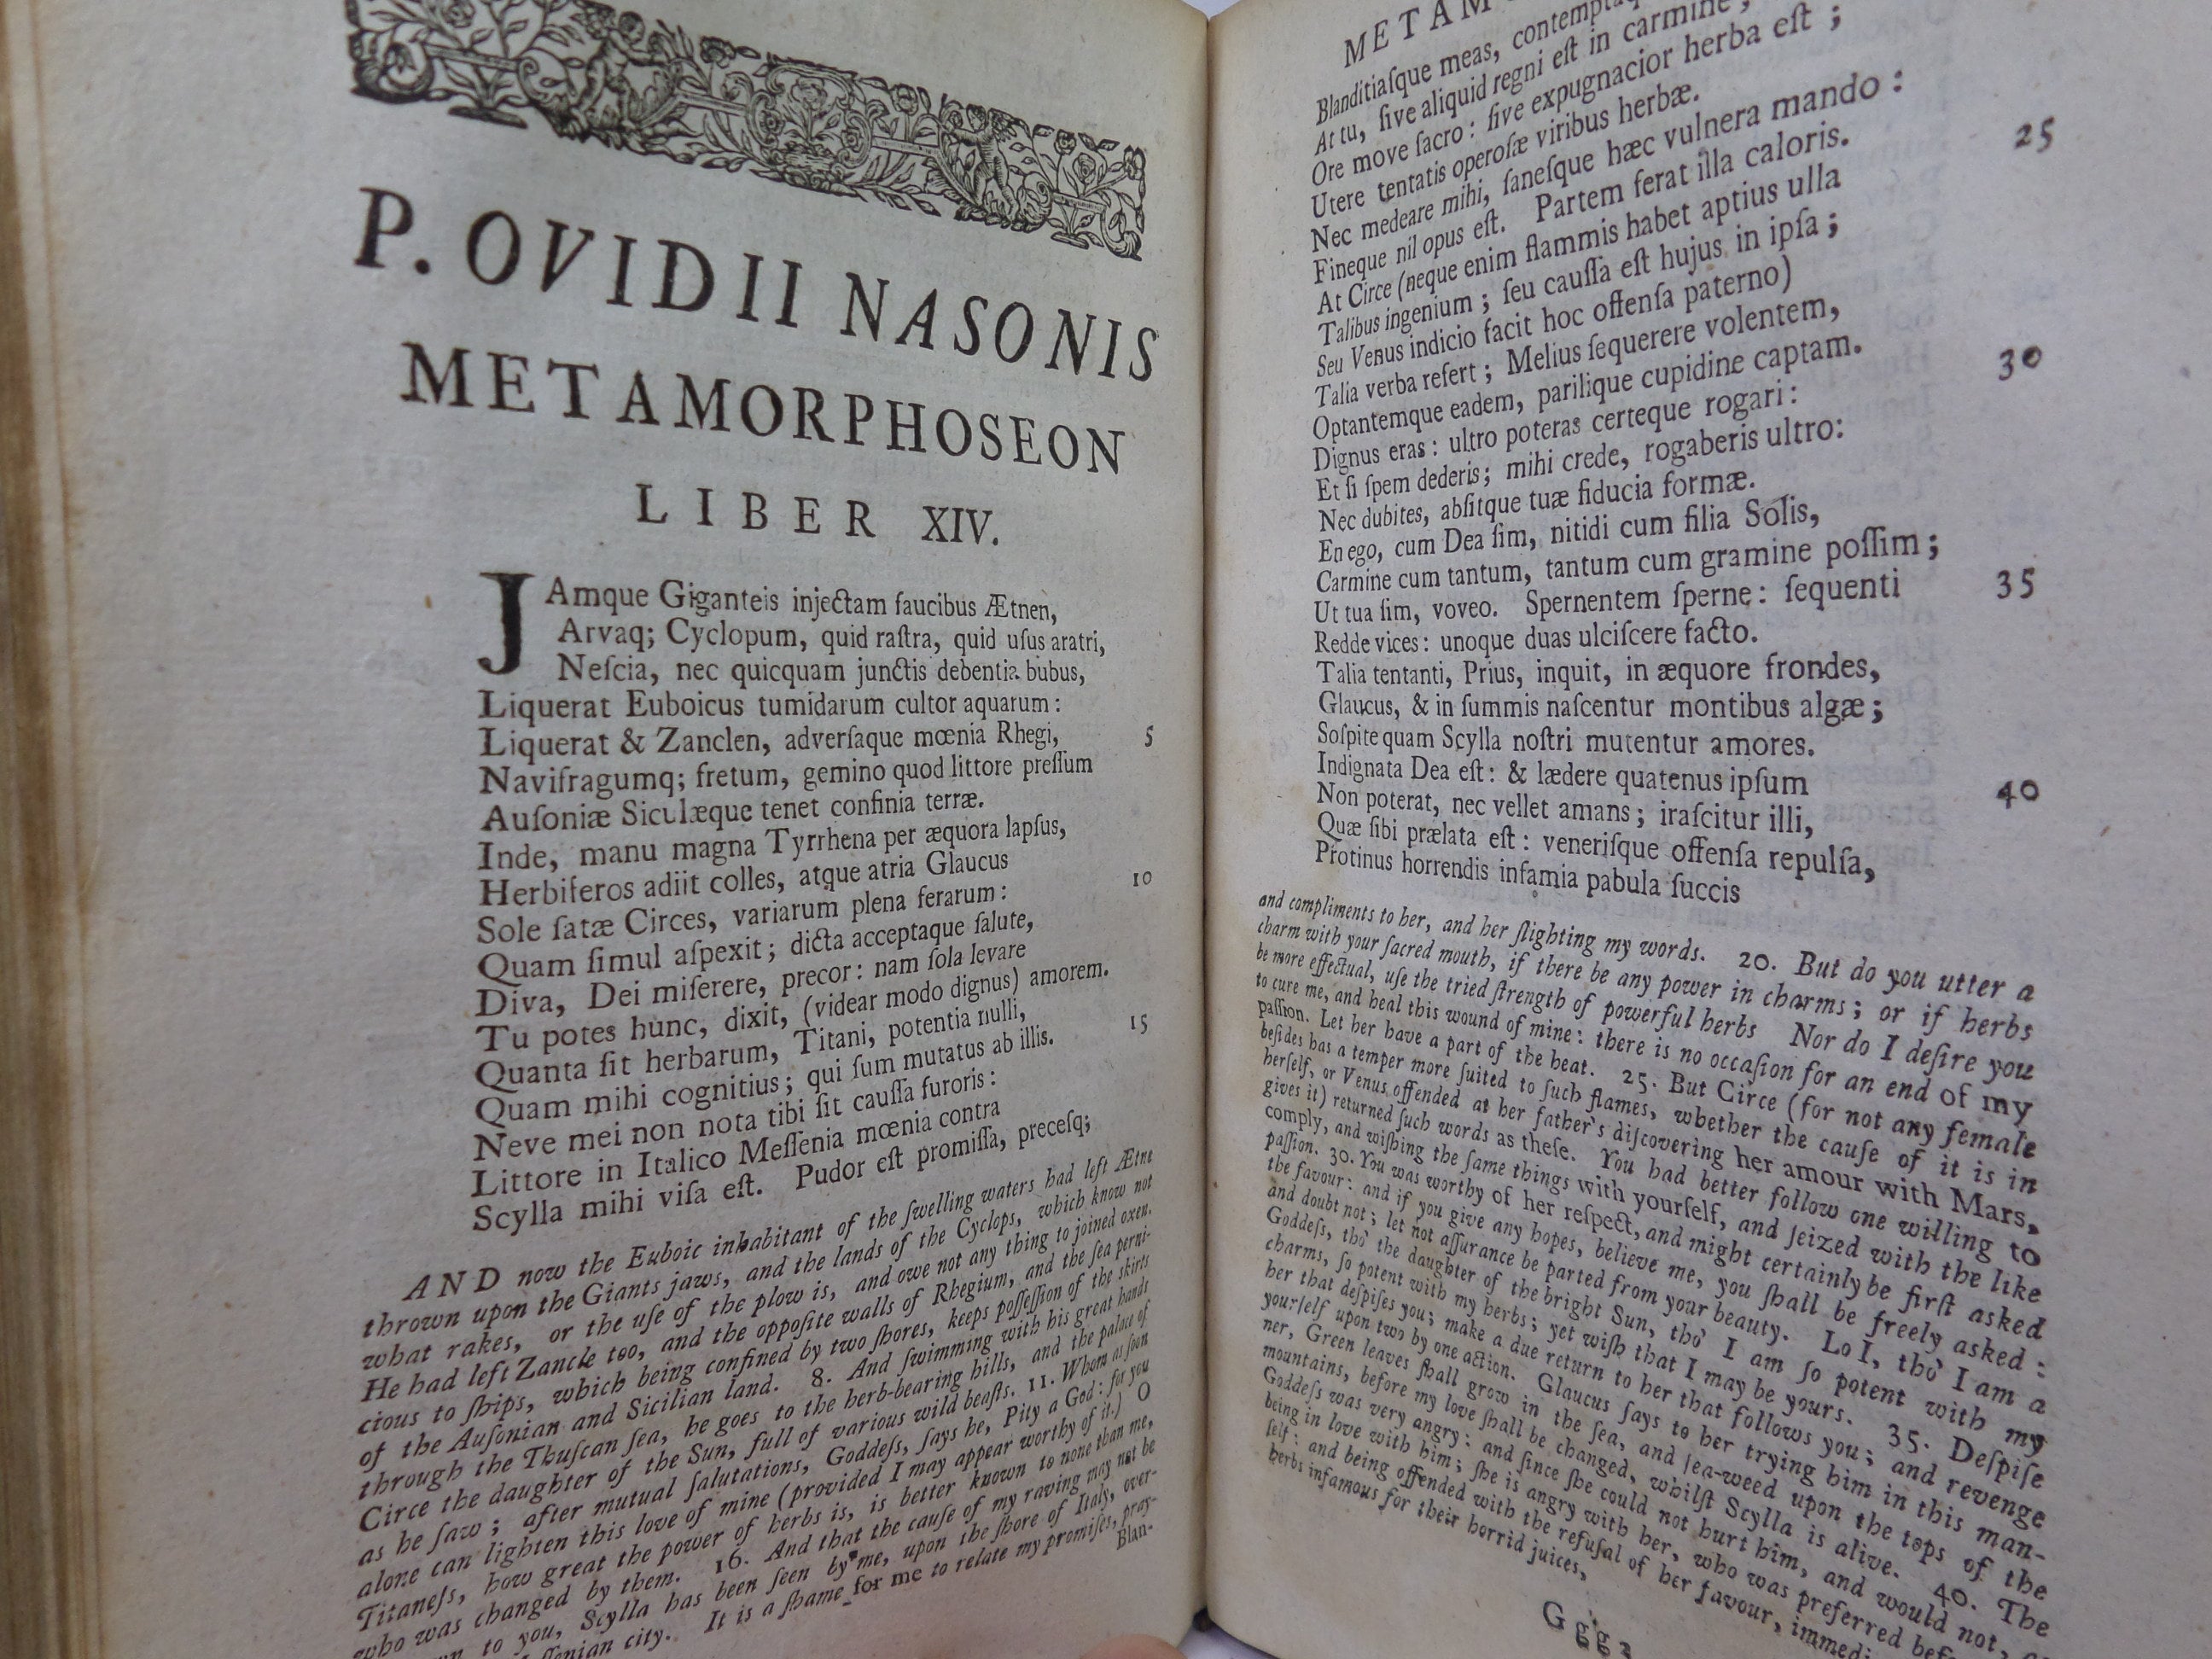 OVID'S METAMORPHOSES IN LATIN AND ENGLISH 1735 LEATHER BINDING